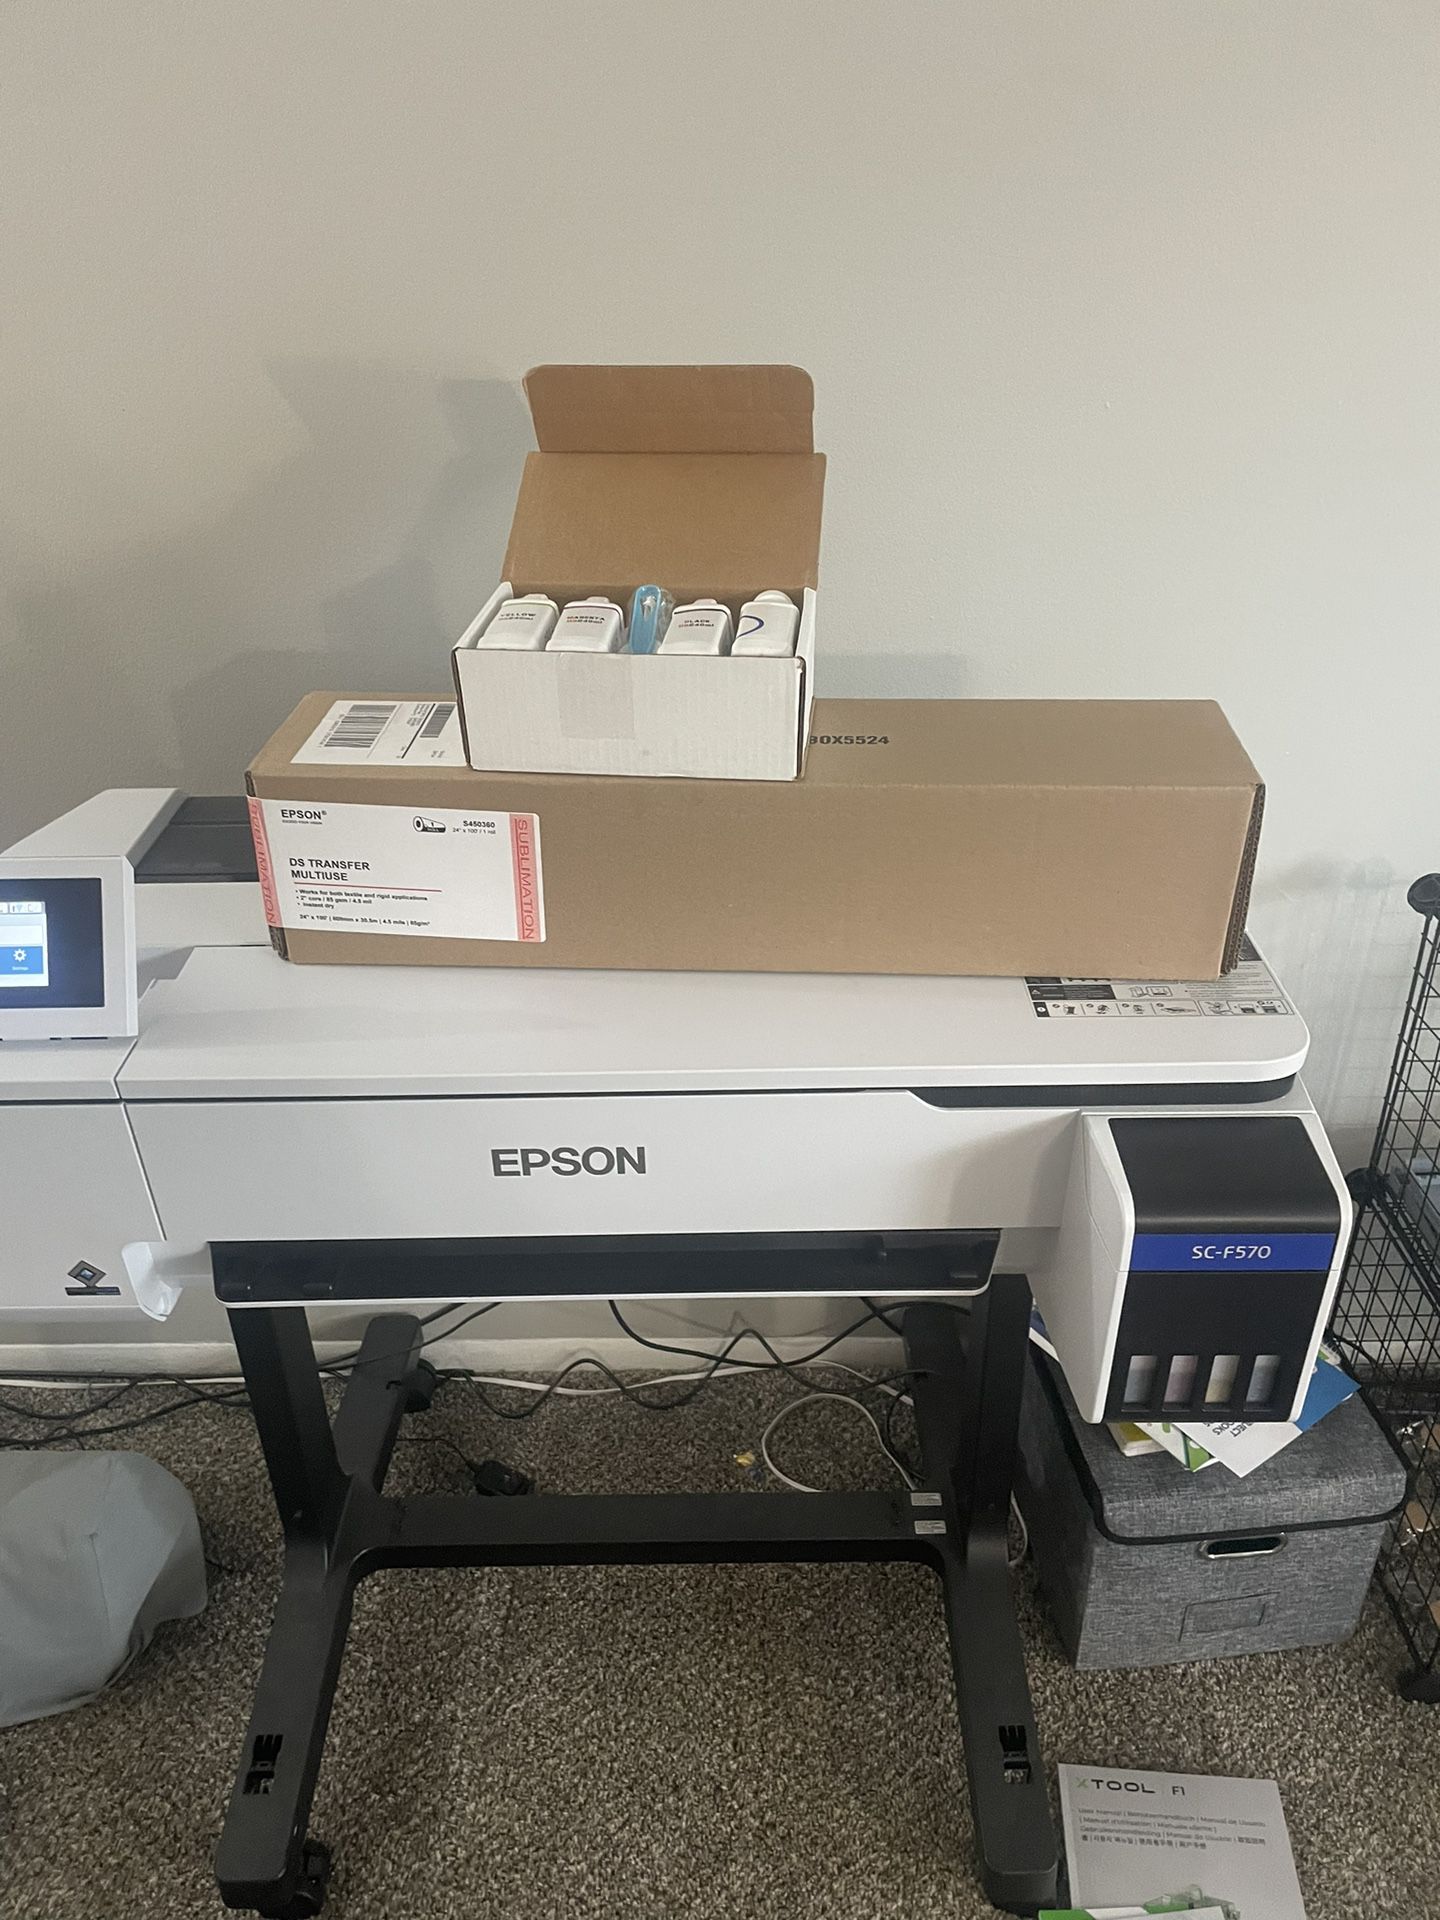 Epson F570 Large Format Sublimation Printer